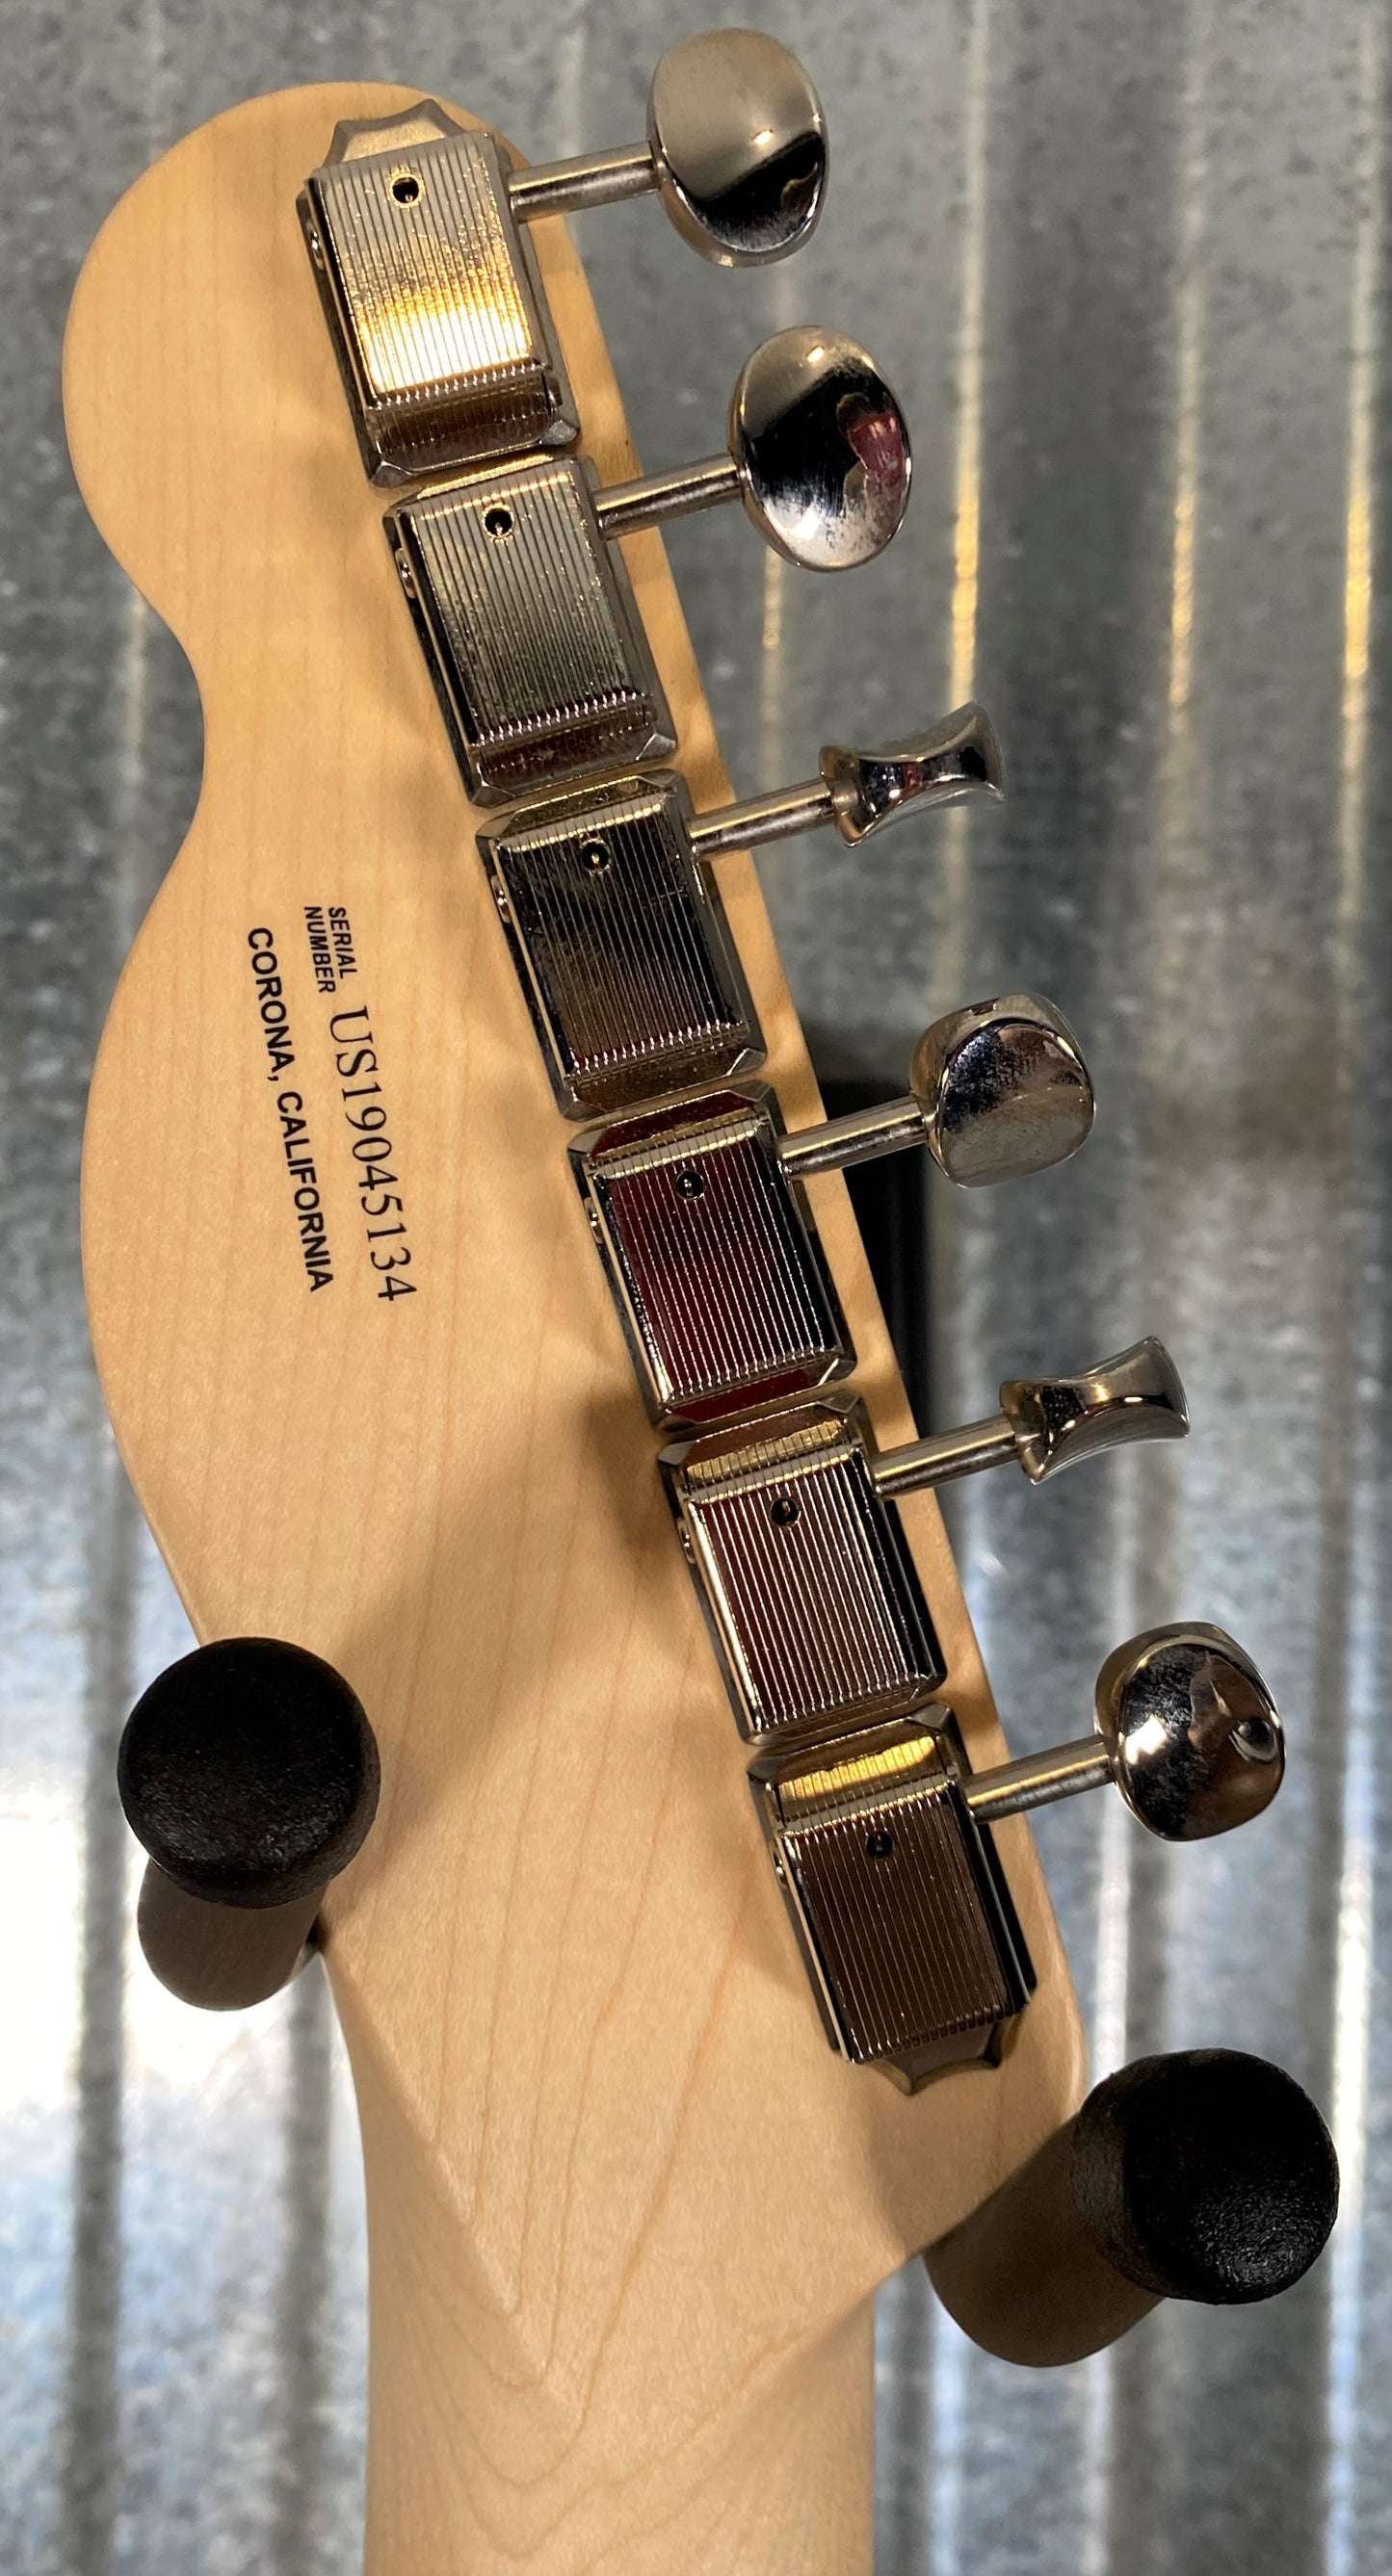 Fender 2019 American Performer Telecaster Hum Aubergine Guitar & Case #5134 Used